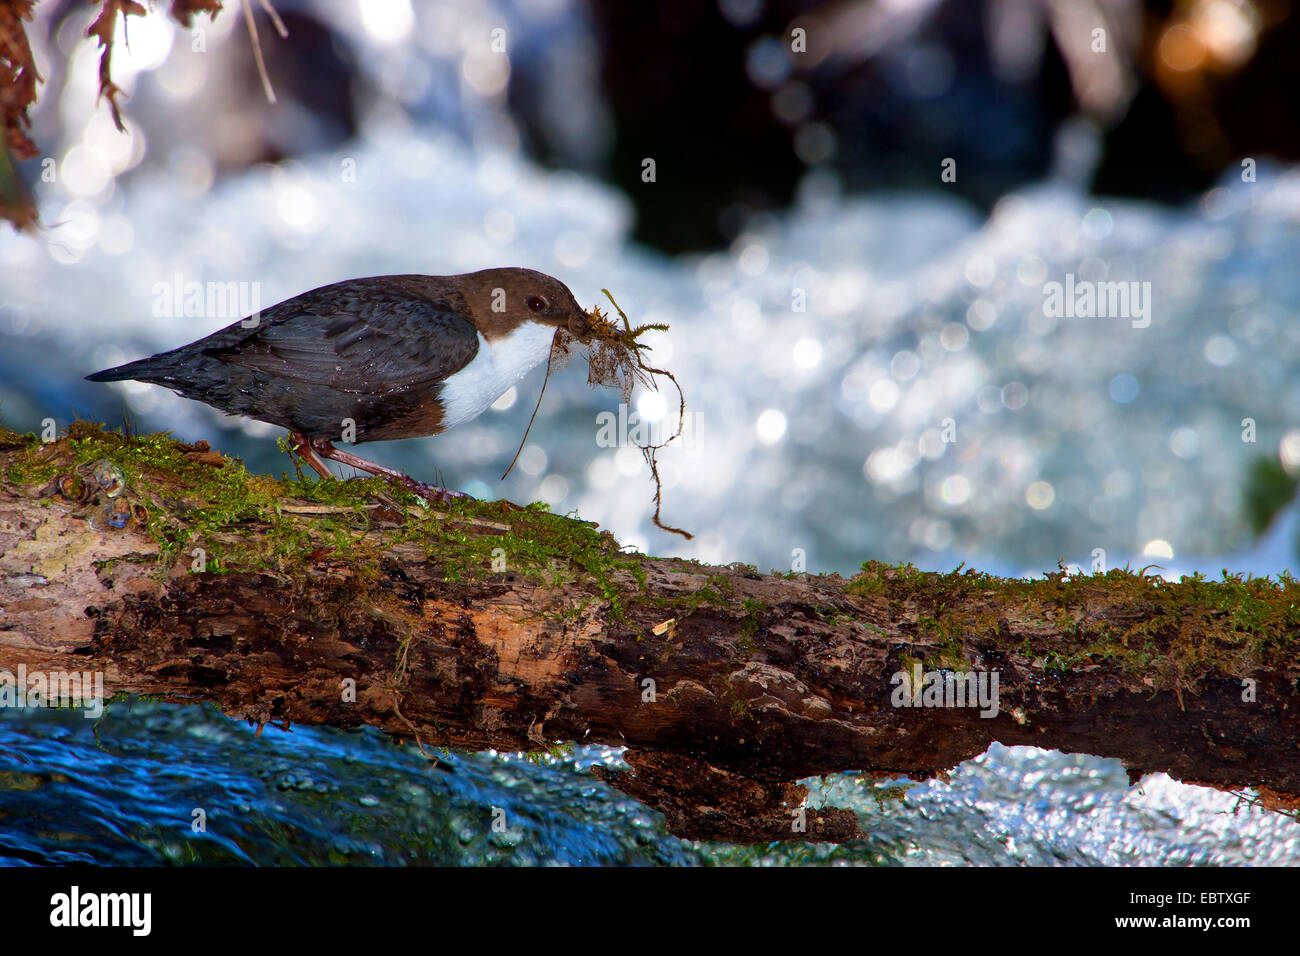 dipper (Cinclus cinclus), with nesting material in its beak at a creek, Switzerland, Sankt Gallen Stock Photo